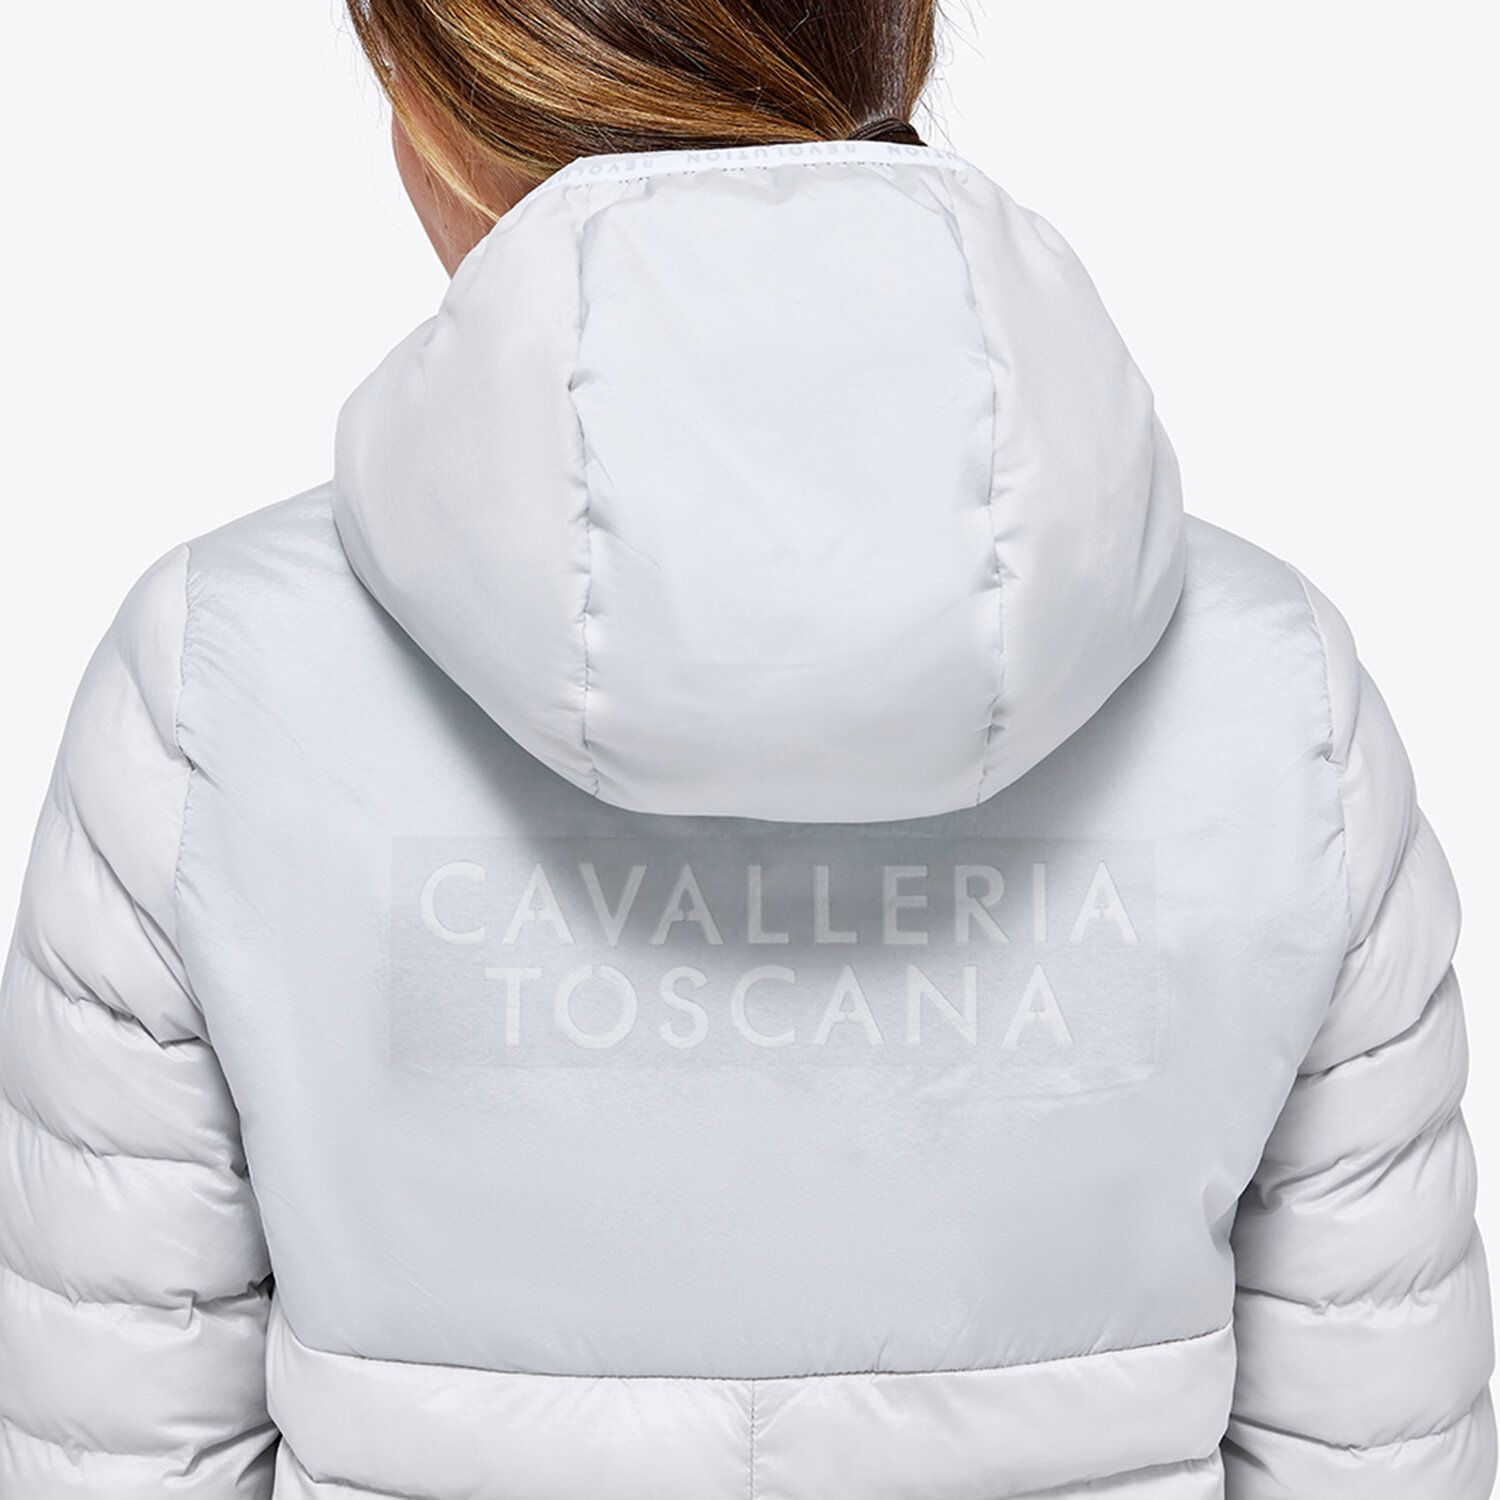 Cavalleria Toscana Puffer jacket with detachable hood PEARL GREY-3